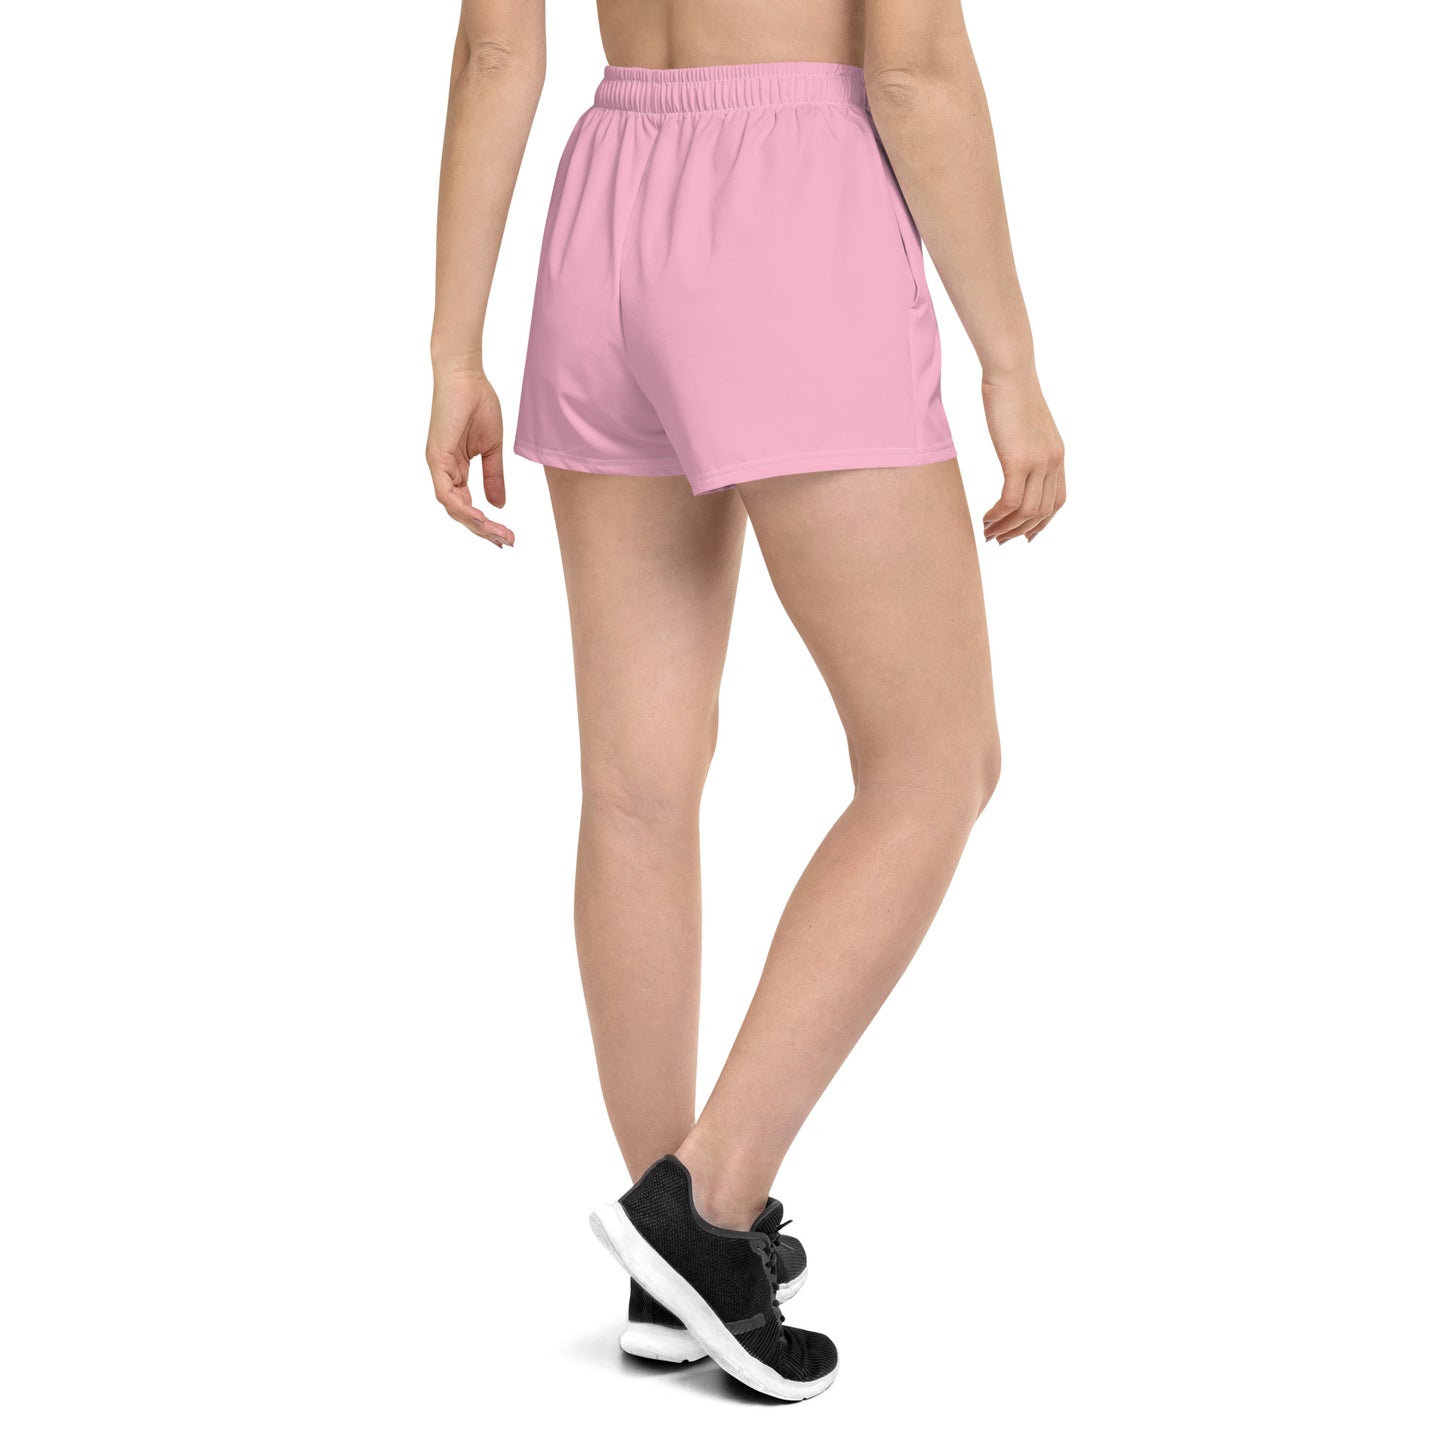 Cake Chad - Women’s Athletic Shorts